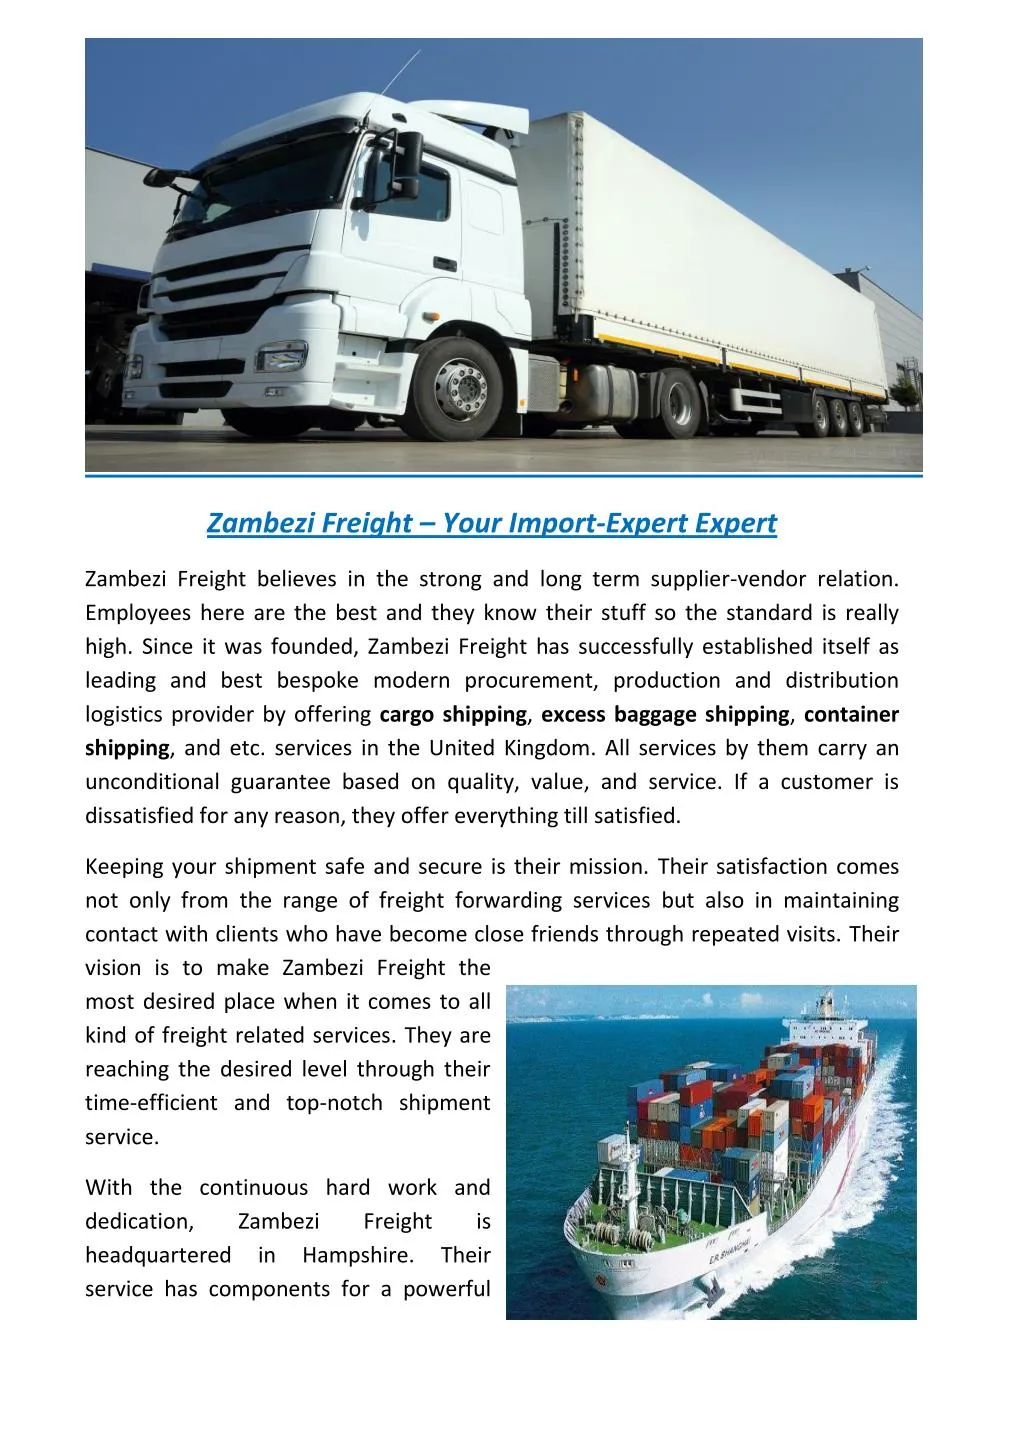 zambezi freight your import expert expert